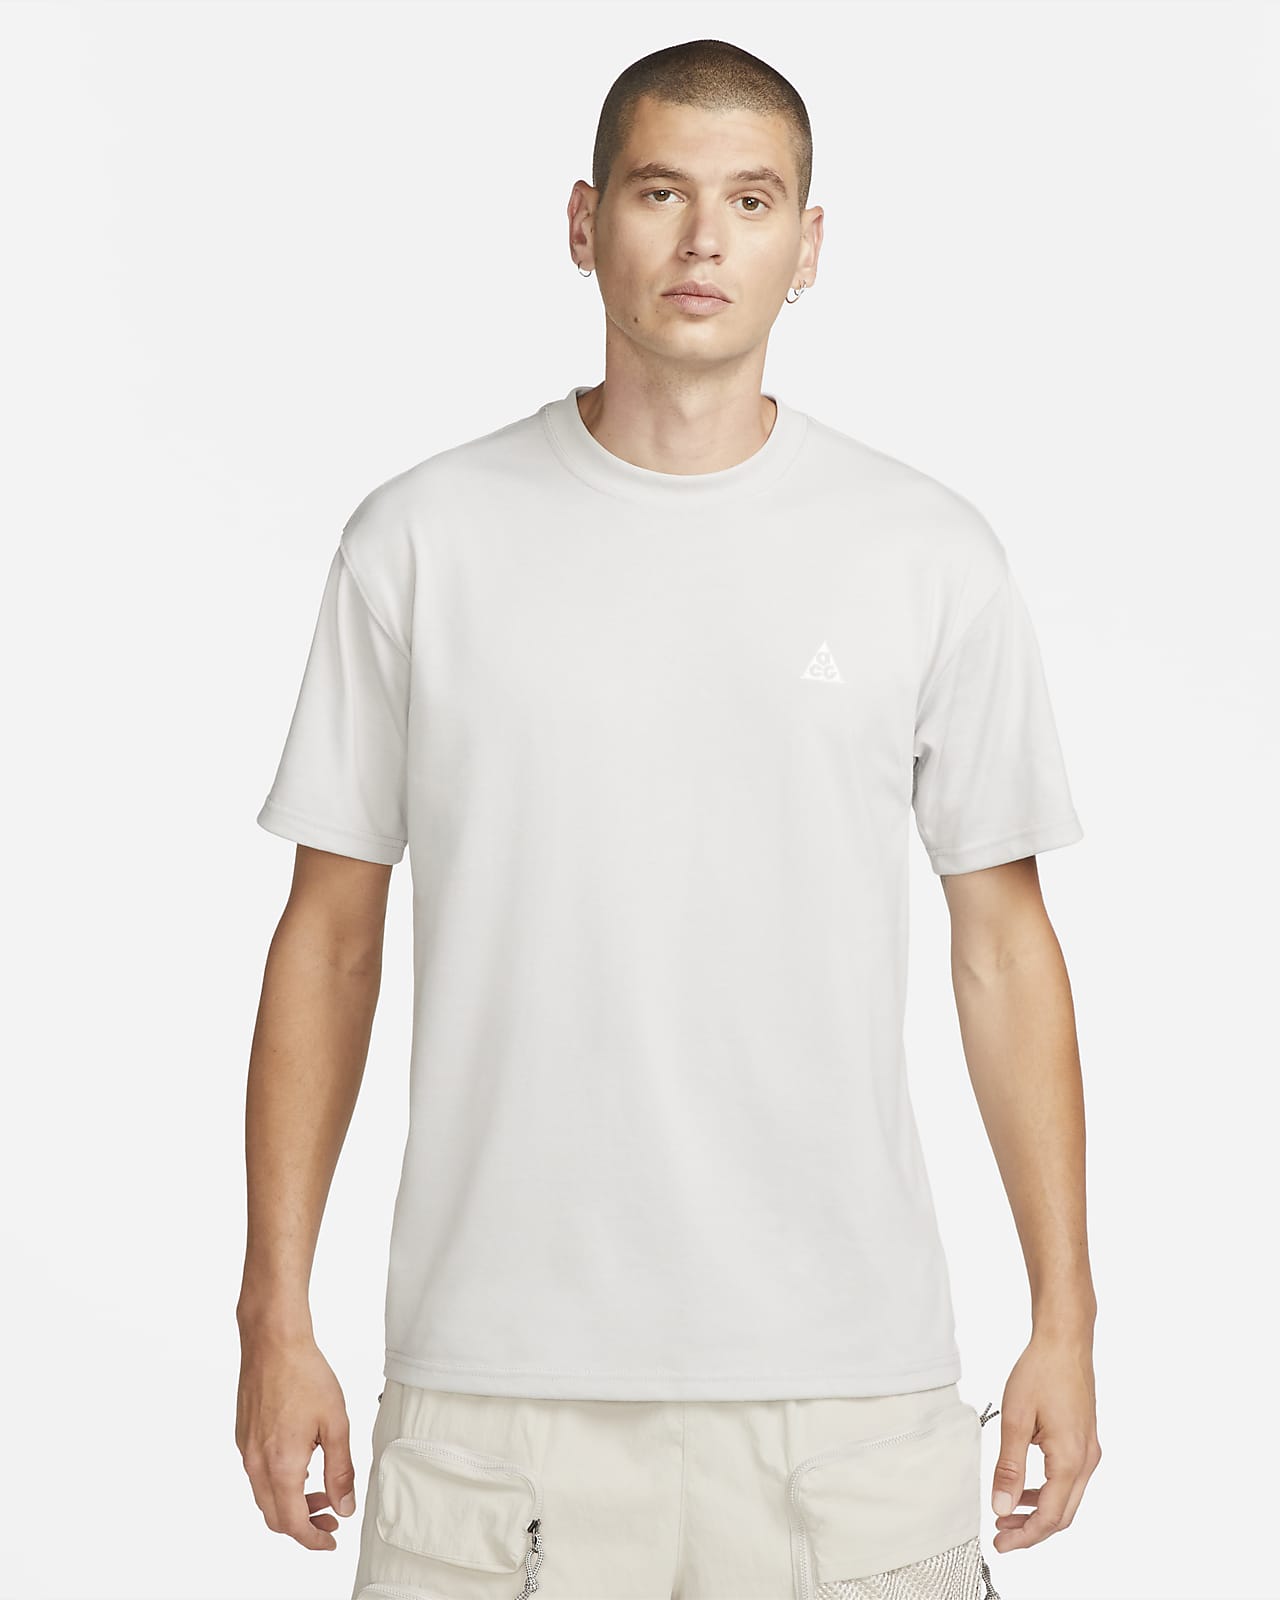 ACG Men's T-Shirt. Nike.com